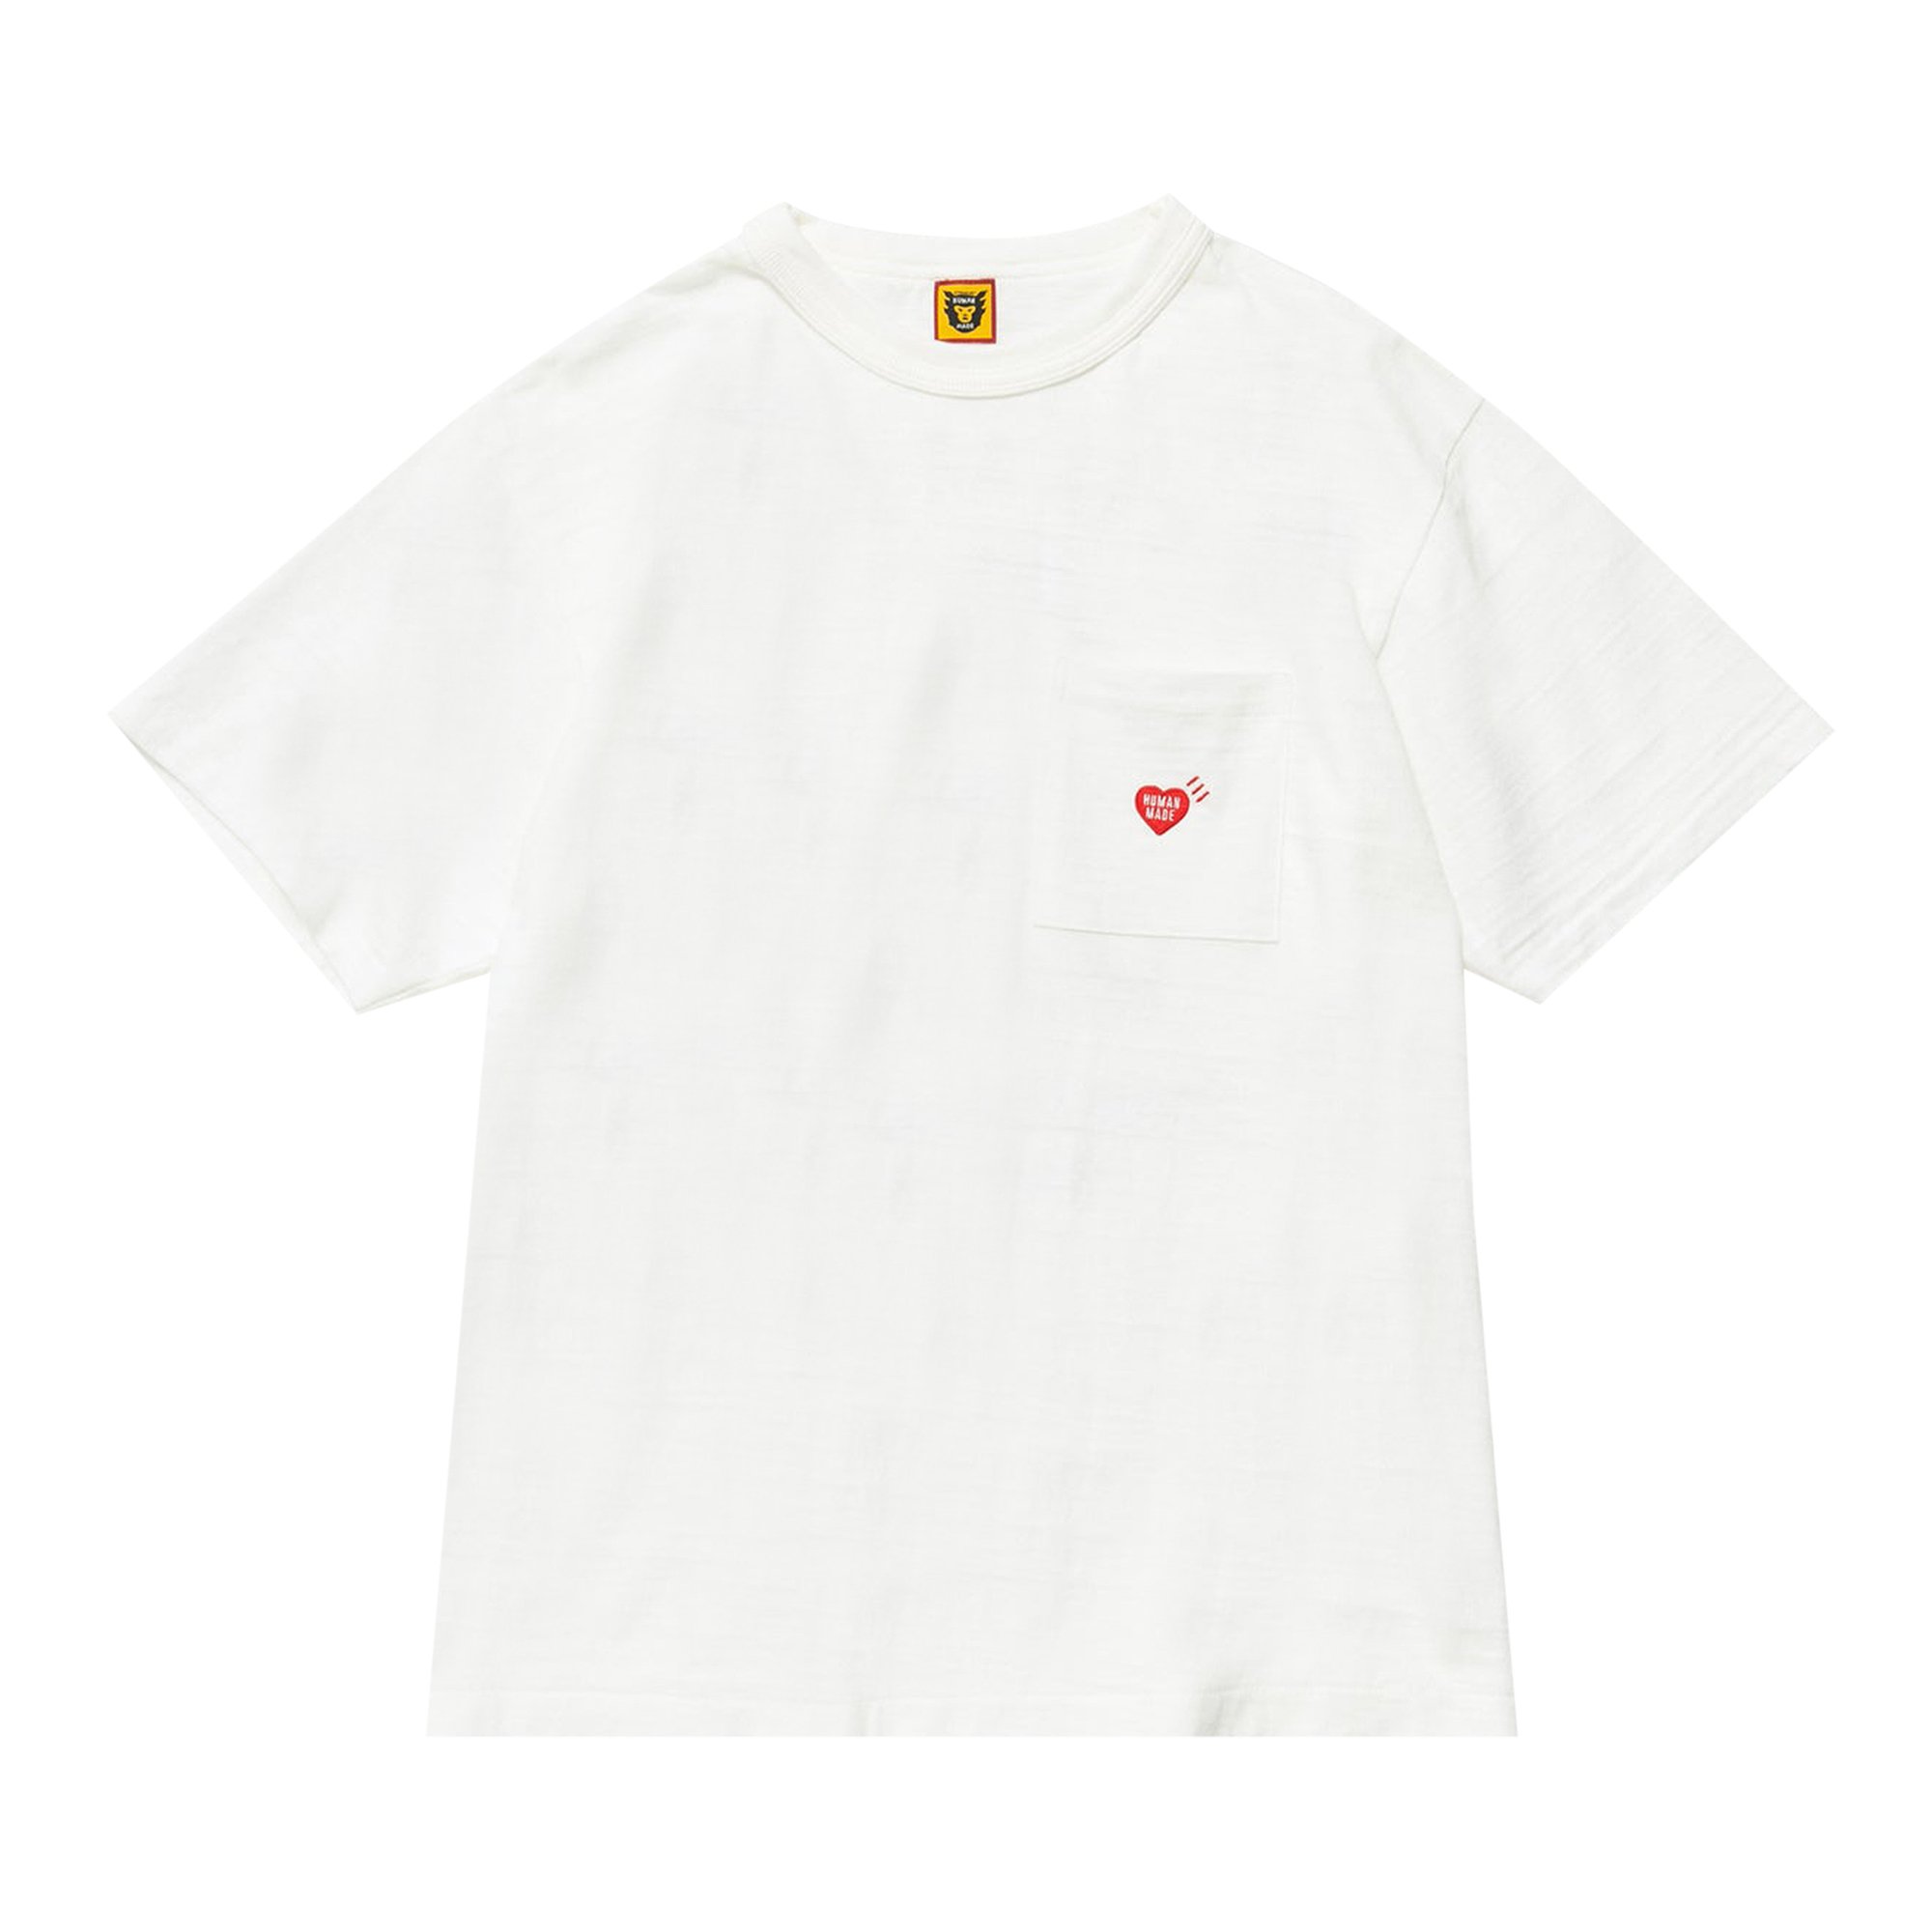 Buy Human Made Pocket T-Shirt #2 'White' - HM24CS004 WHIT | GOAT